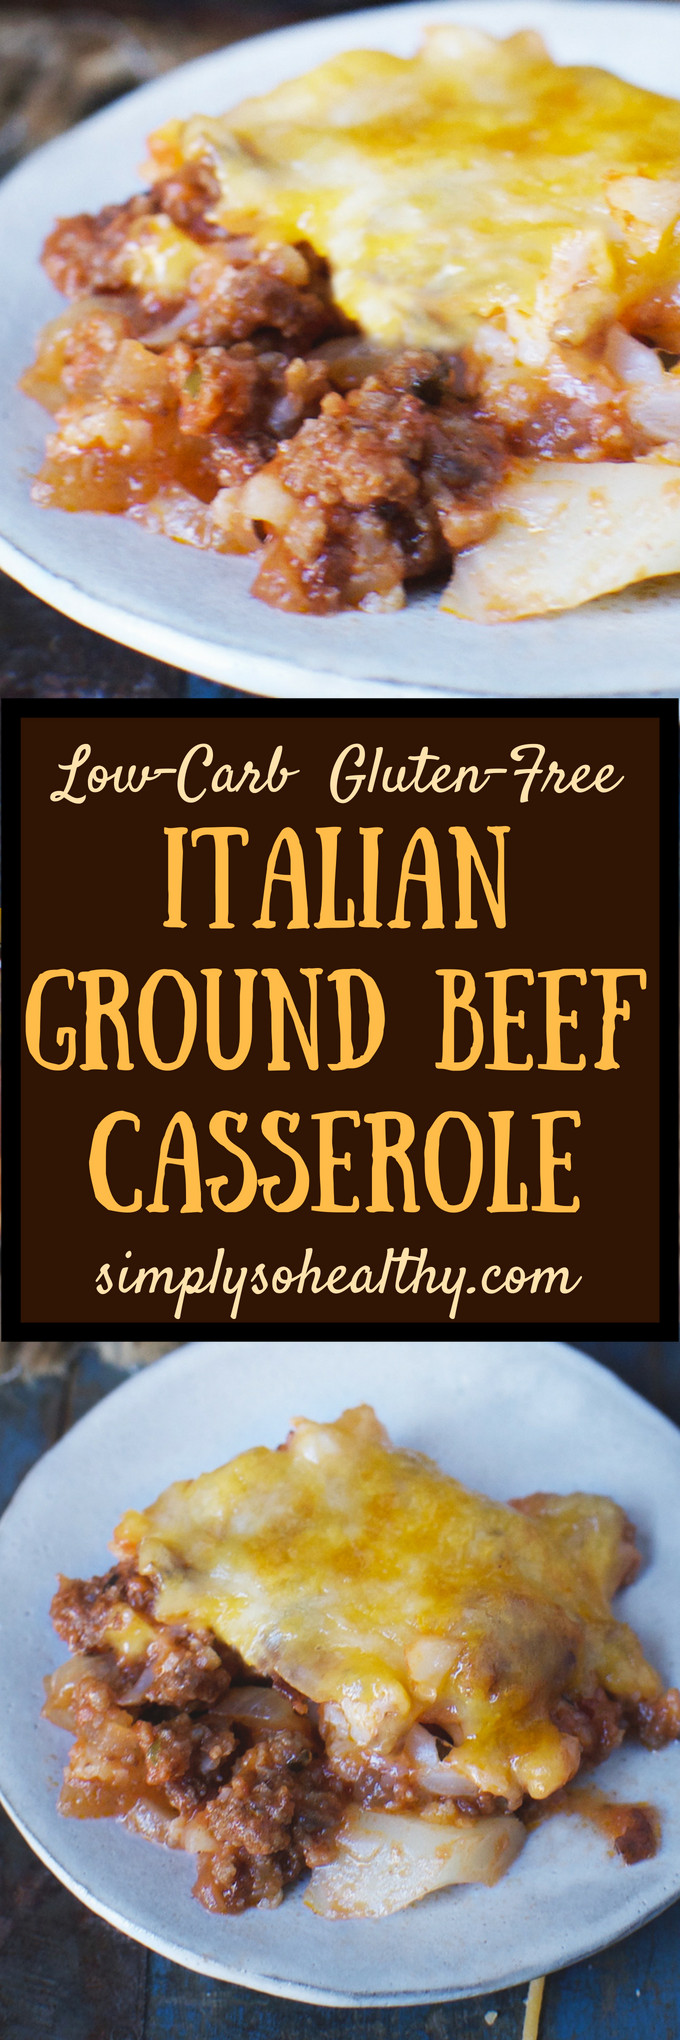 Healthy Casseroles With Ground Beef
 Keto Friendly Italian Ground Beef Casserole Recipe